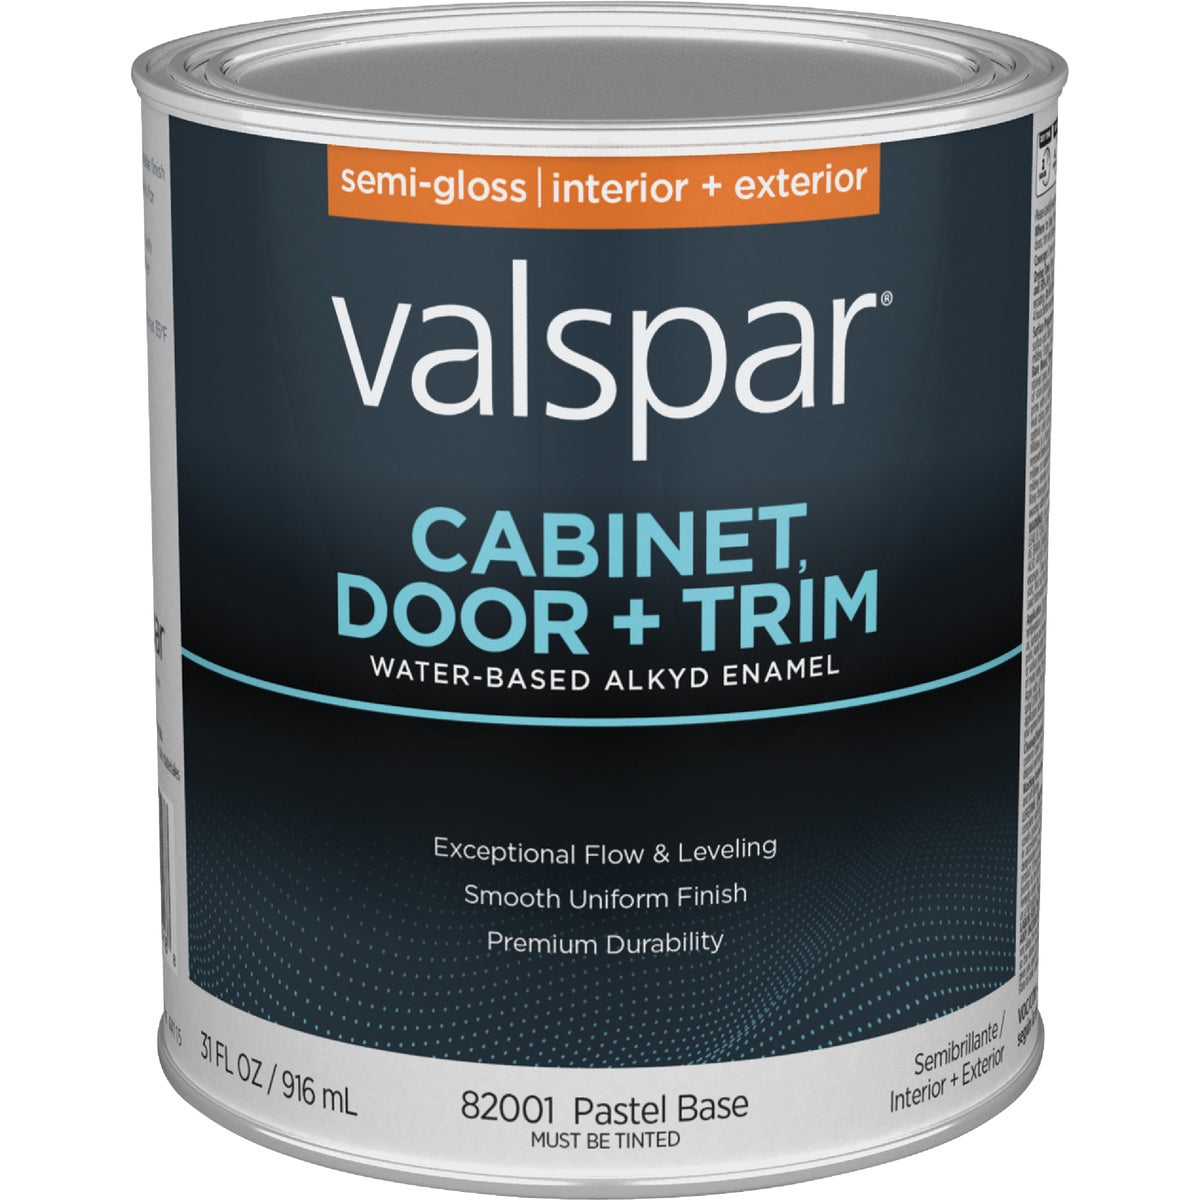 Valspar Cabinet, Door, & Trim Valspar 028.0082001.005 Valspar Cabinet Door & Trim Waterborne Alkyd Semi-Gloss Interior/Exterior Enamel, Pastel Base, 1 Qt. 028